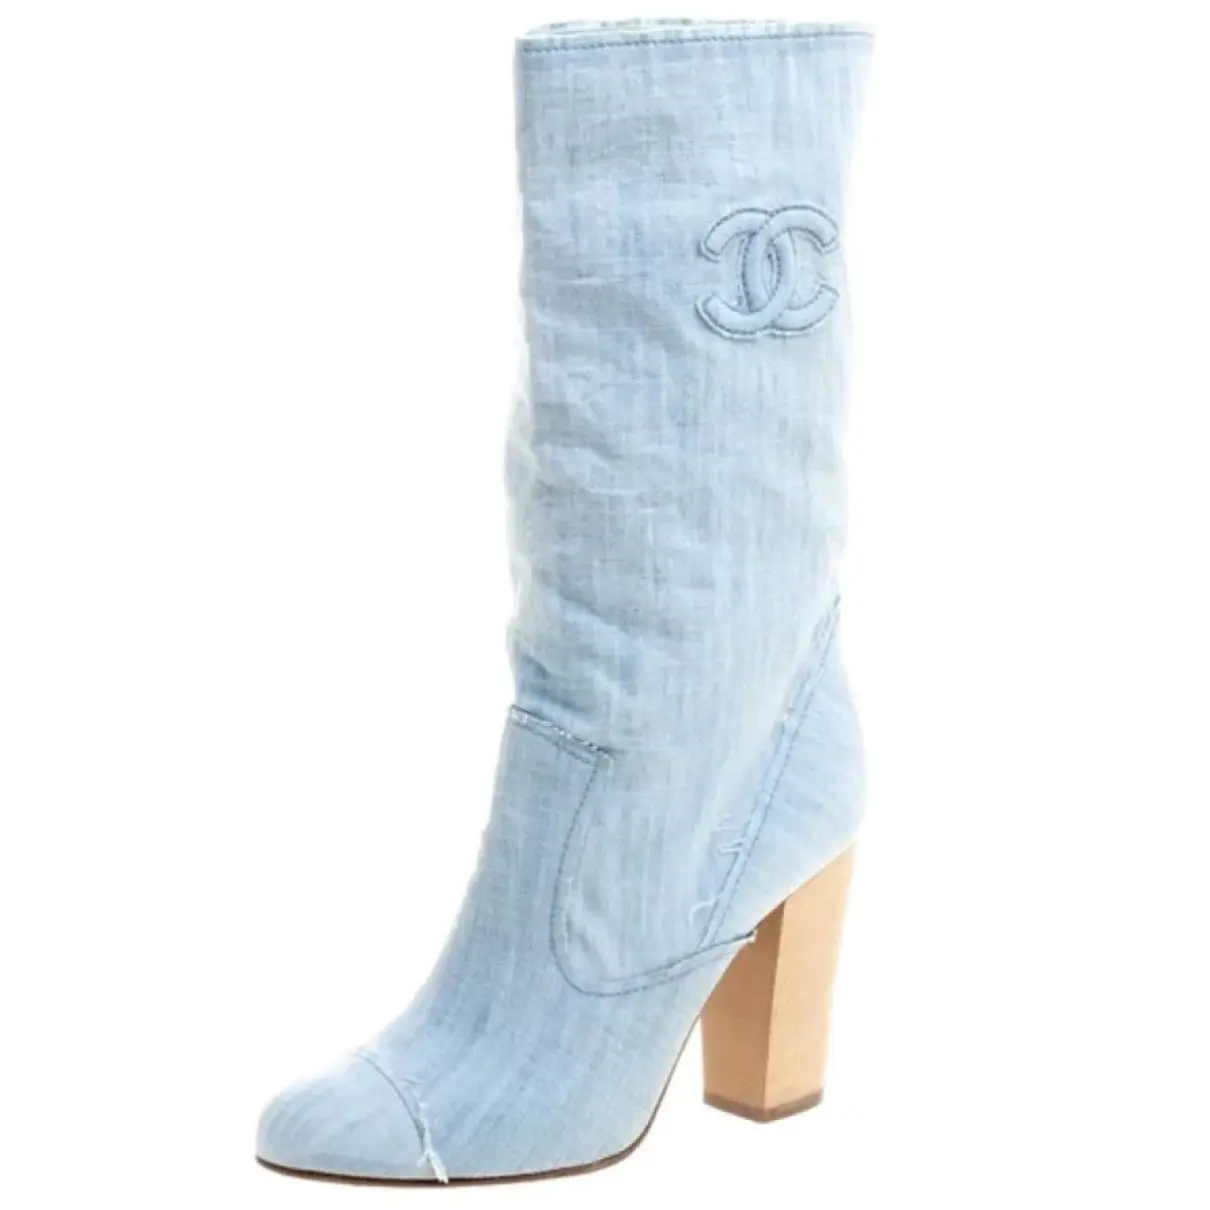 Buy Chanel Cloth wellington boots online - Vintage